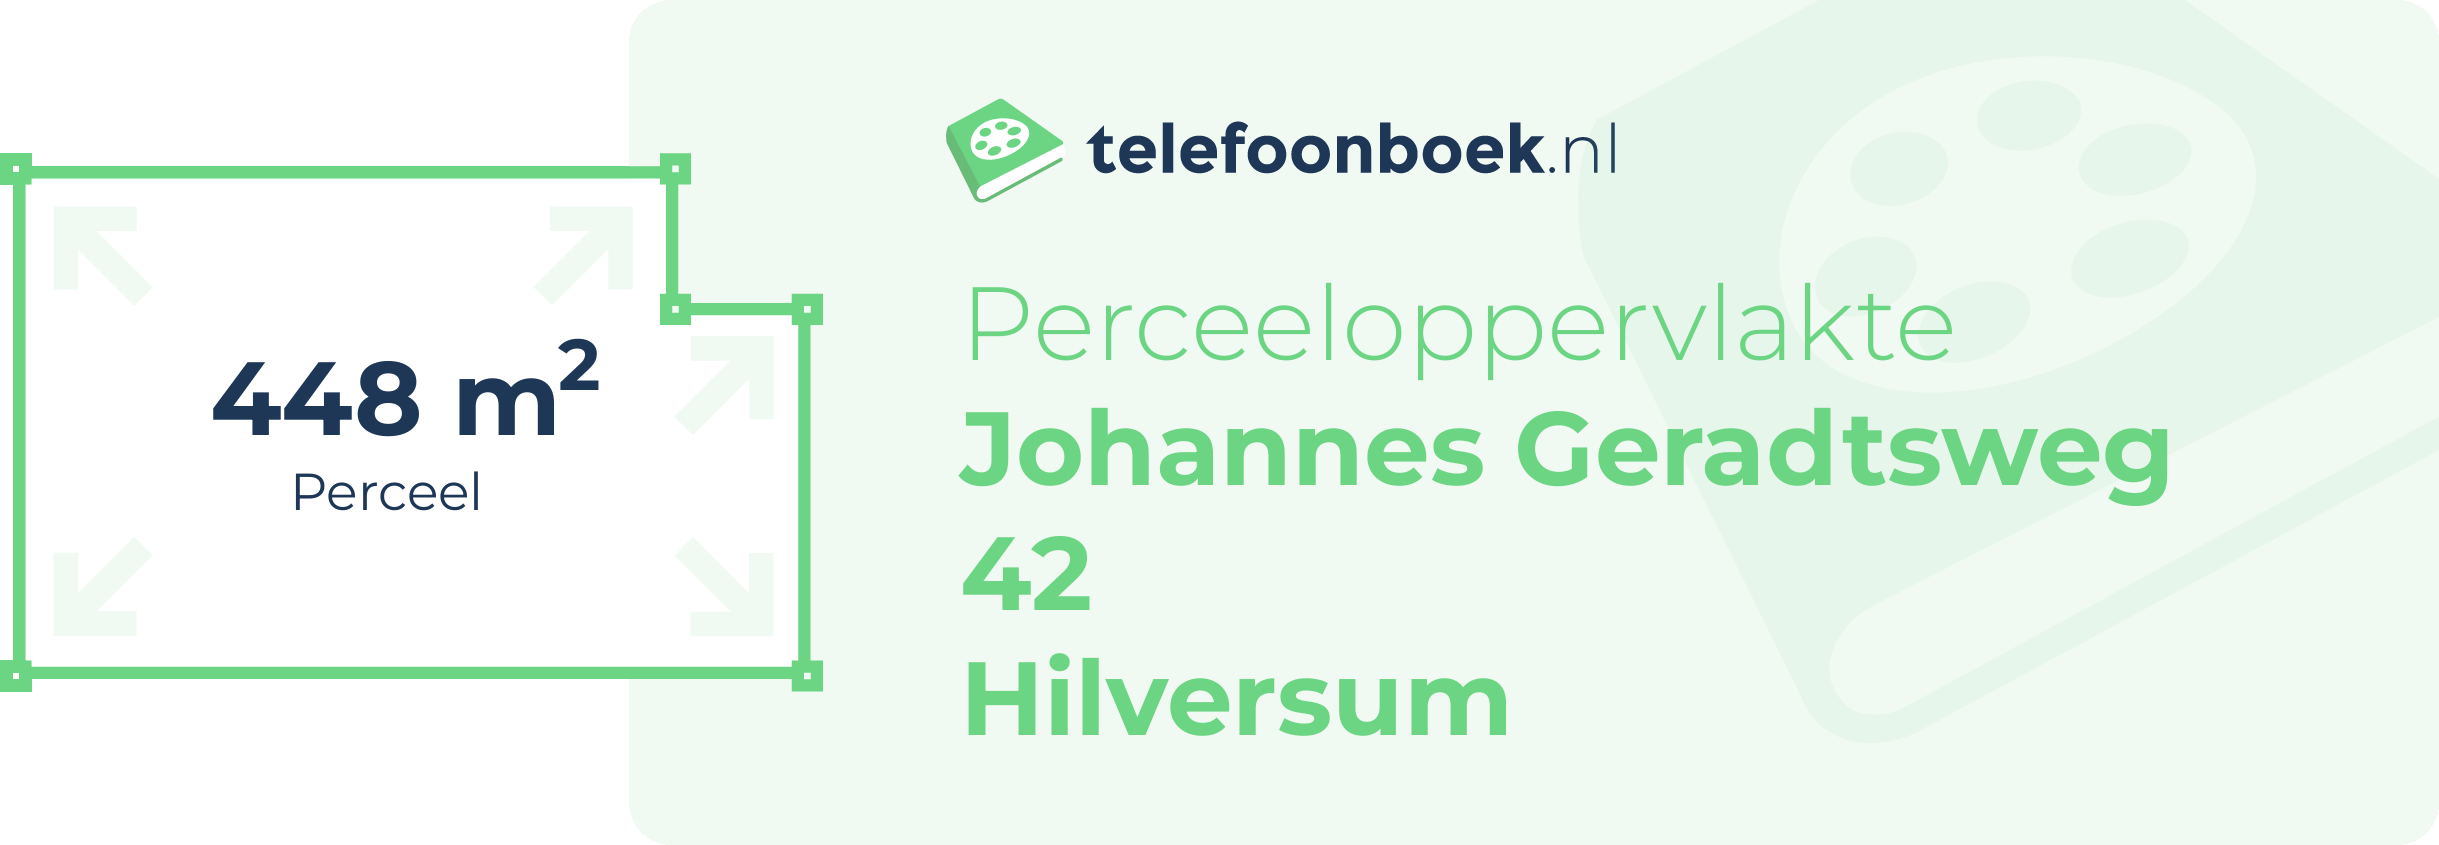 Perceeloppervlakte Johannes Geradtsweg 42 Hilversum